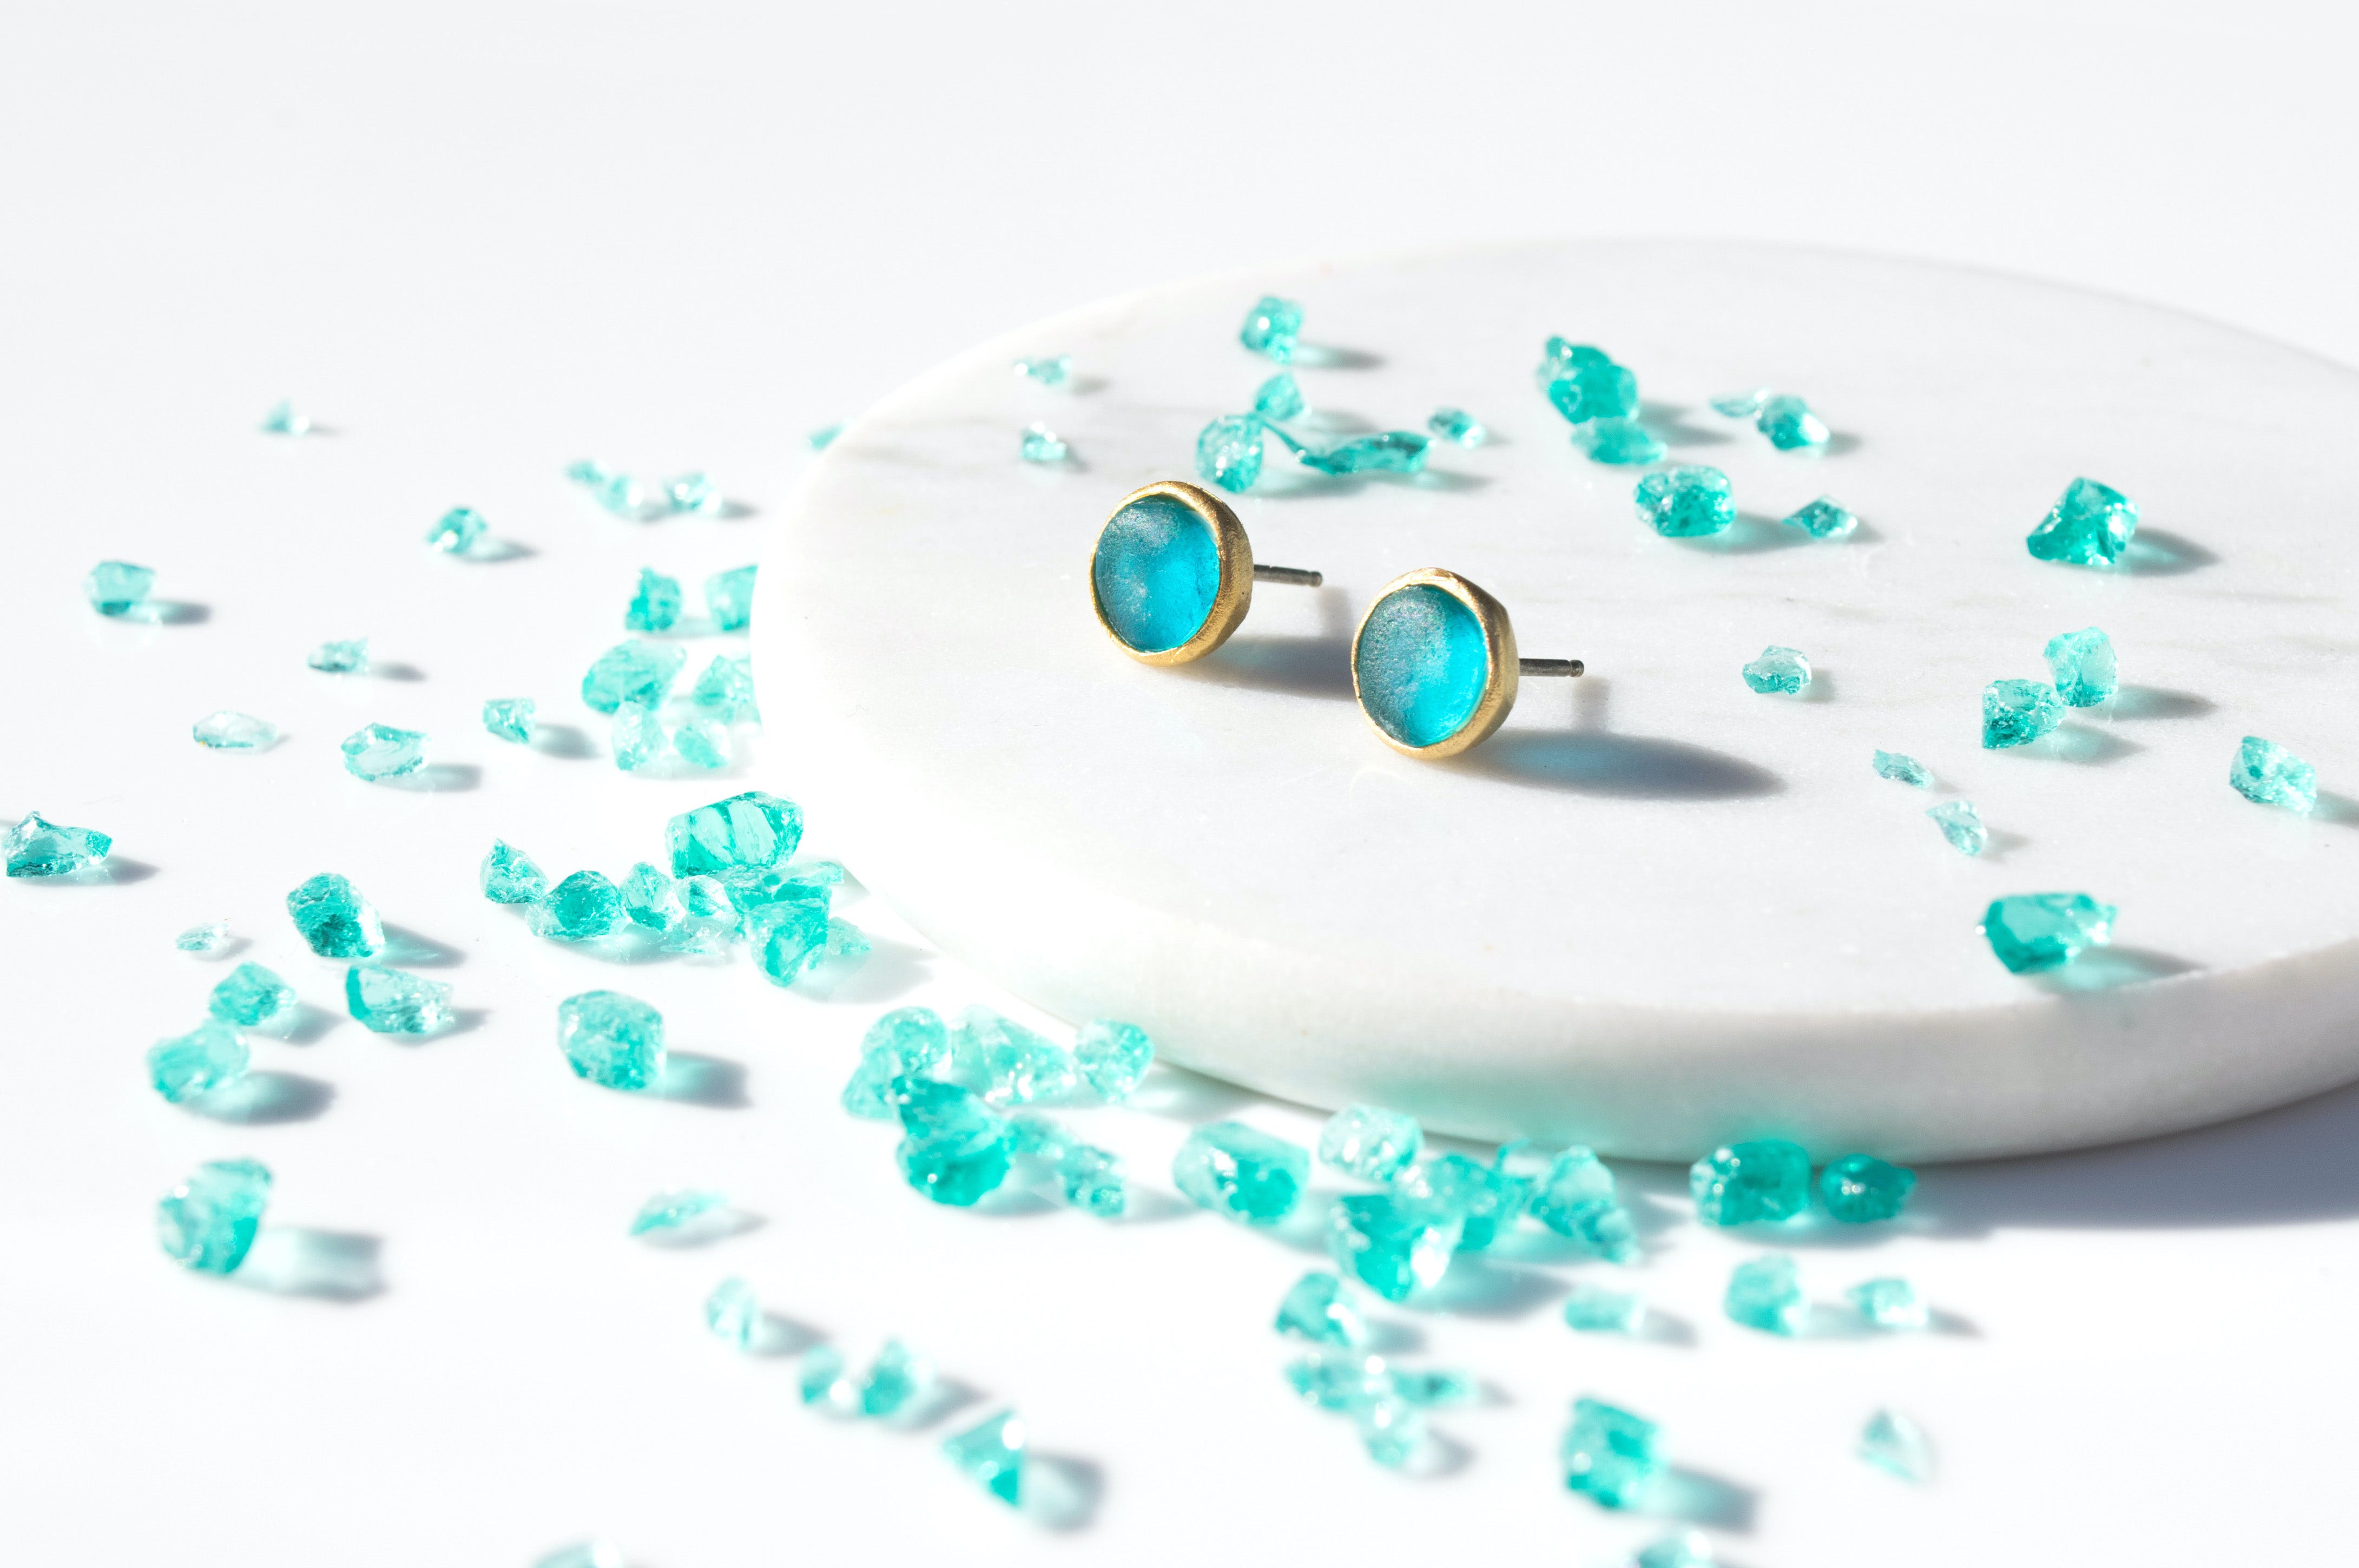 Bubble Post Earrings -Turquoise